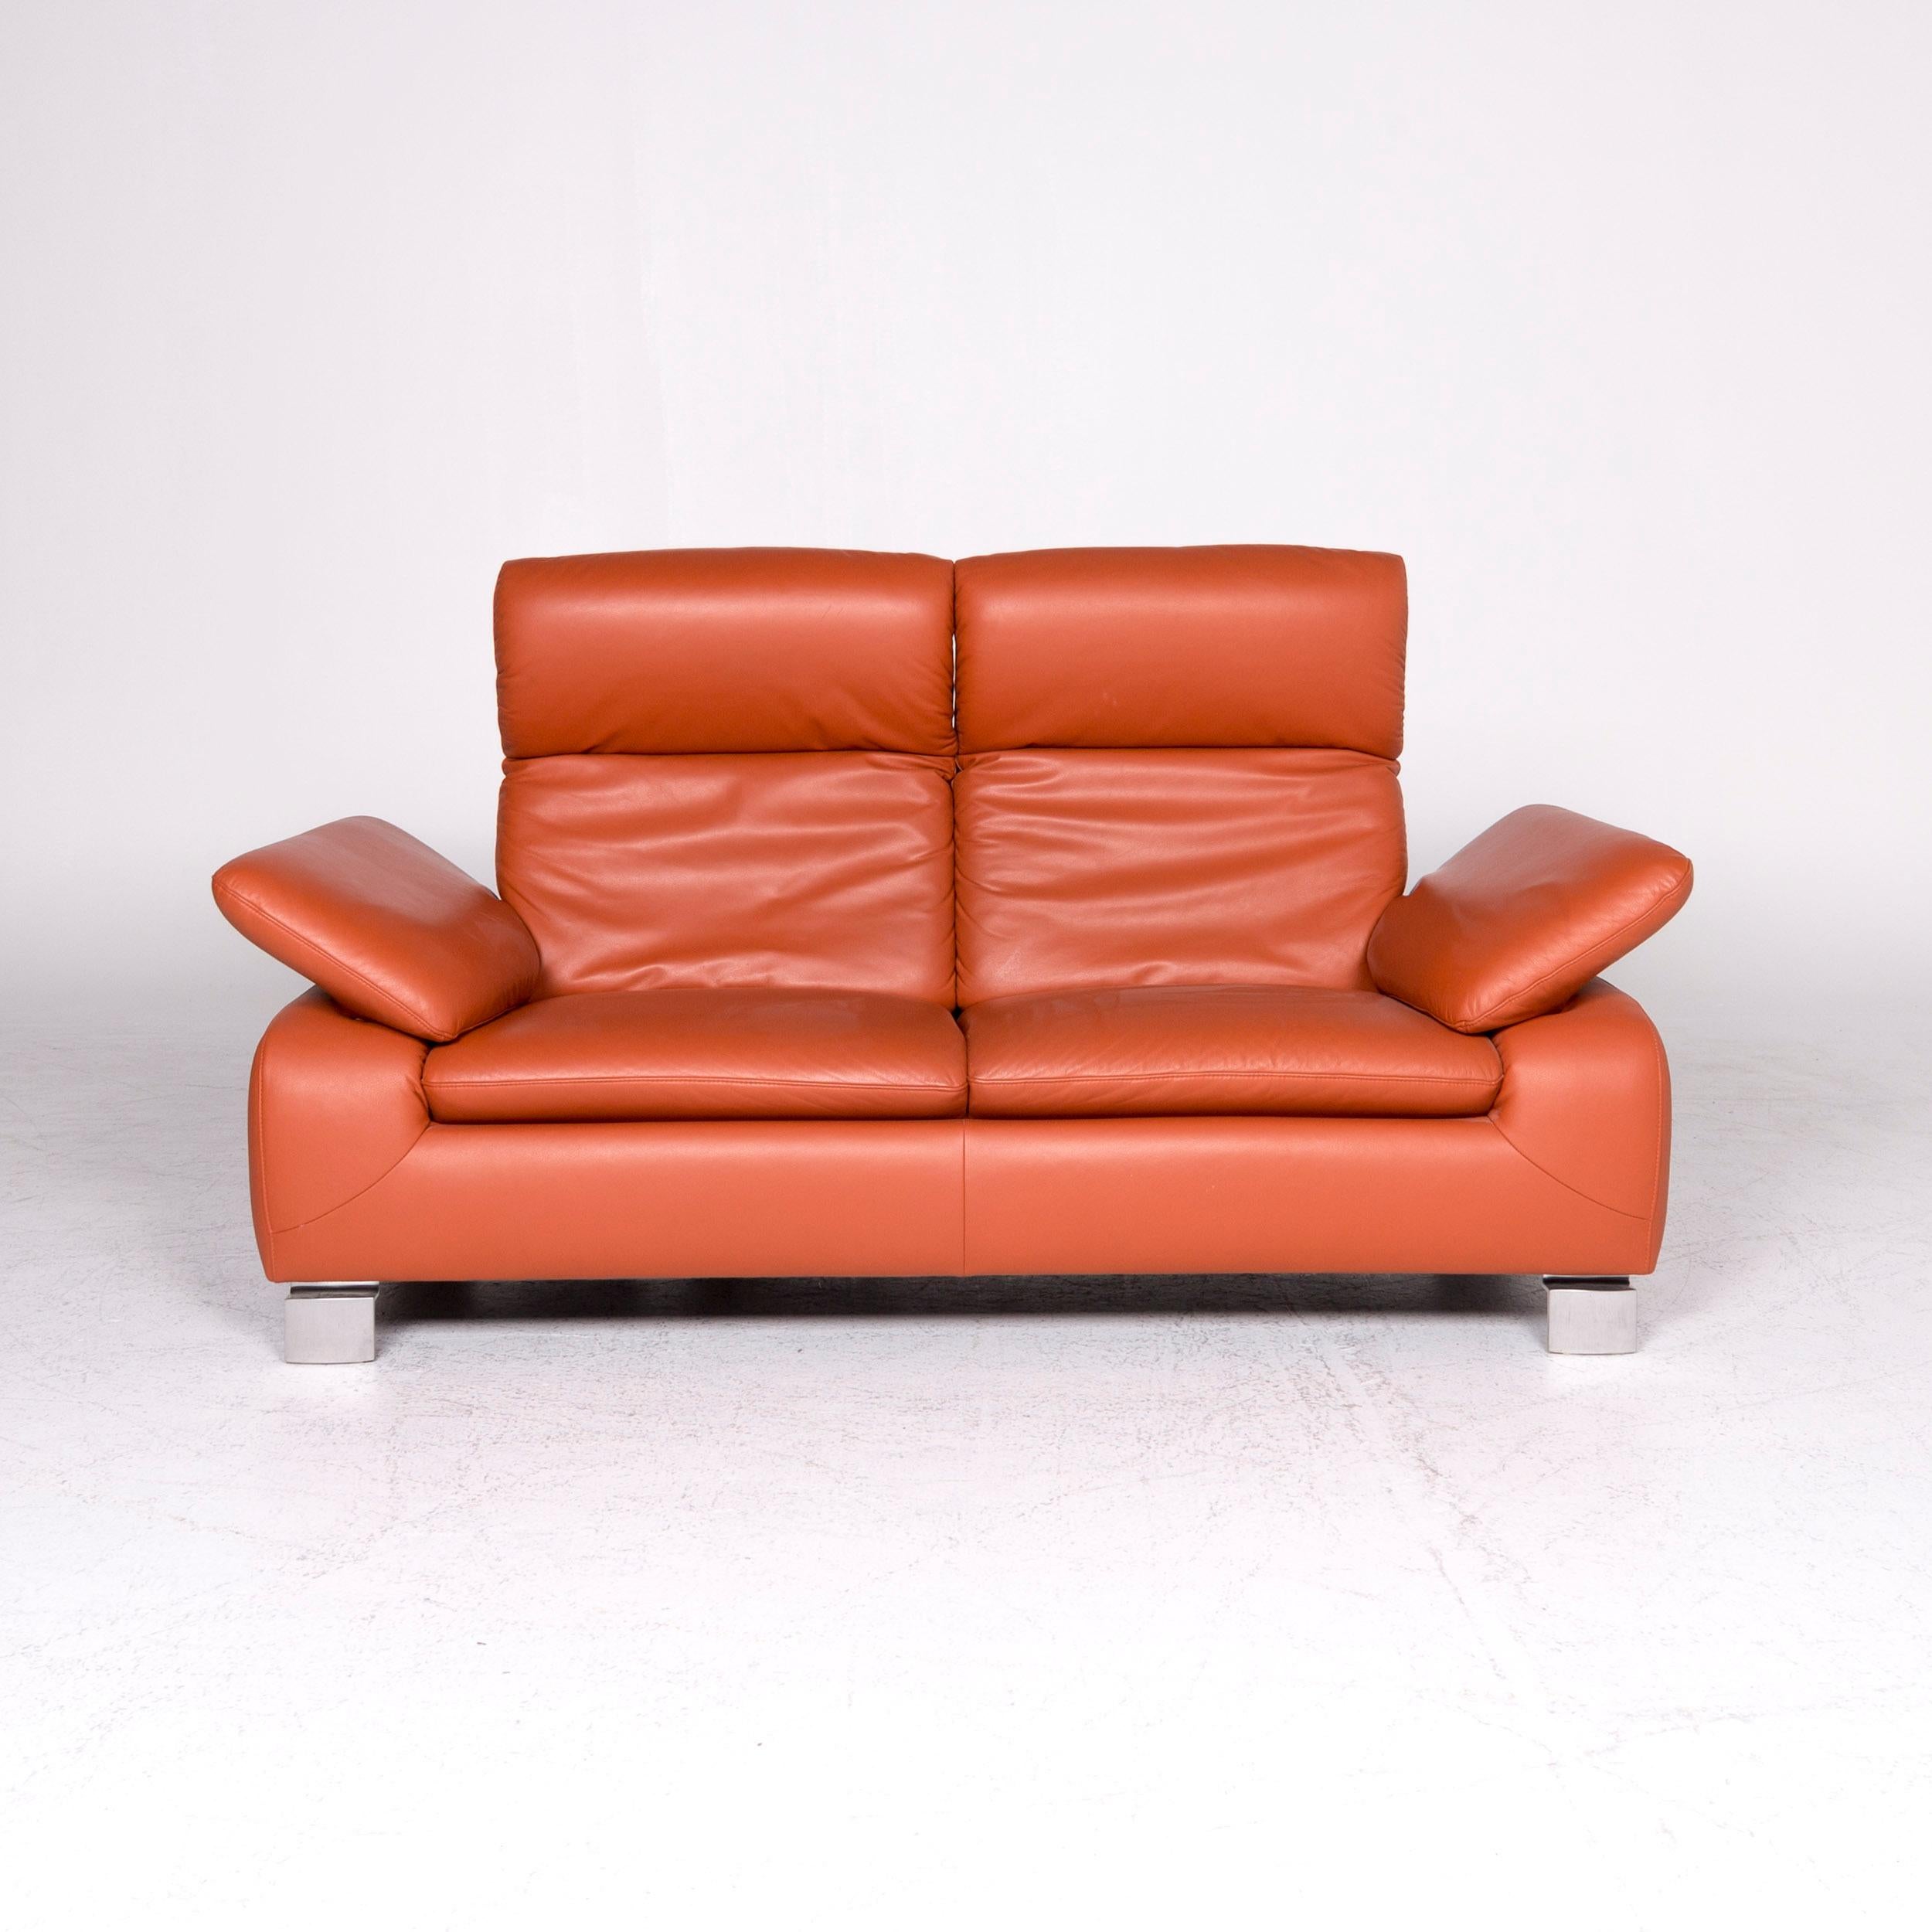 German Ewald Schillig Designer Leather Sofa Orange Two-Seat Couch For Sale